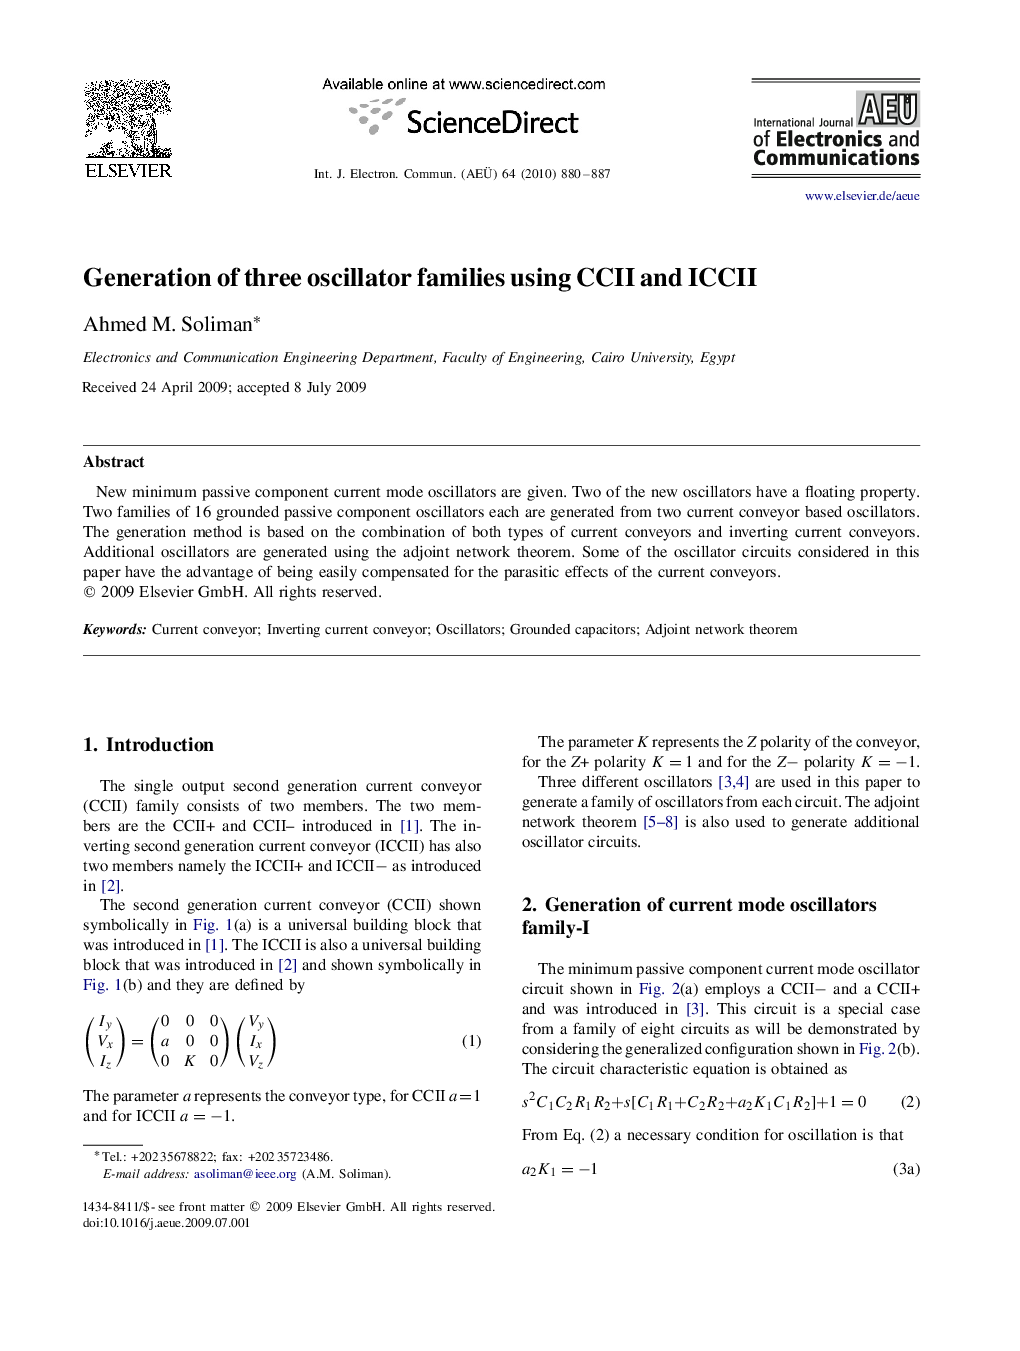 Generation of three oscillator families using CCII and ICCII